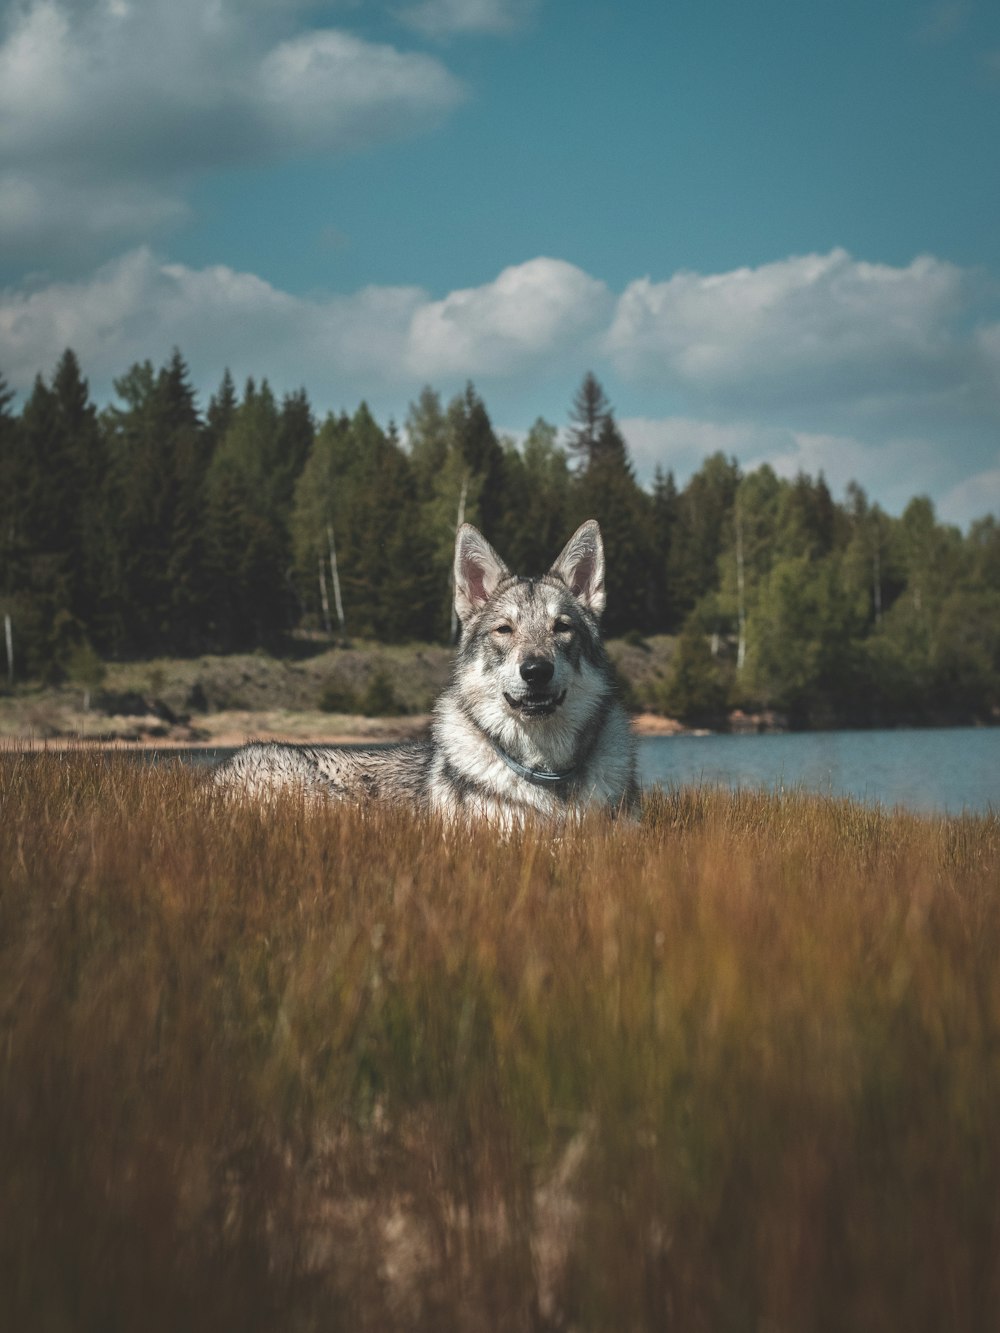 a dog sitting in a field